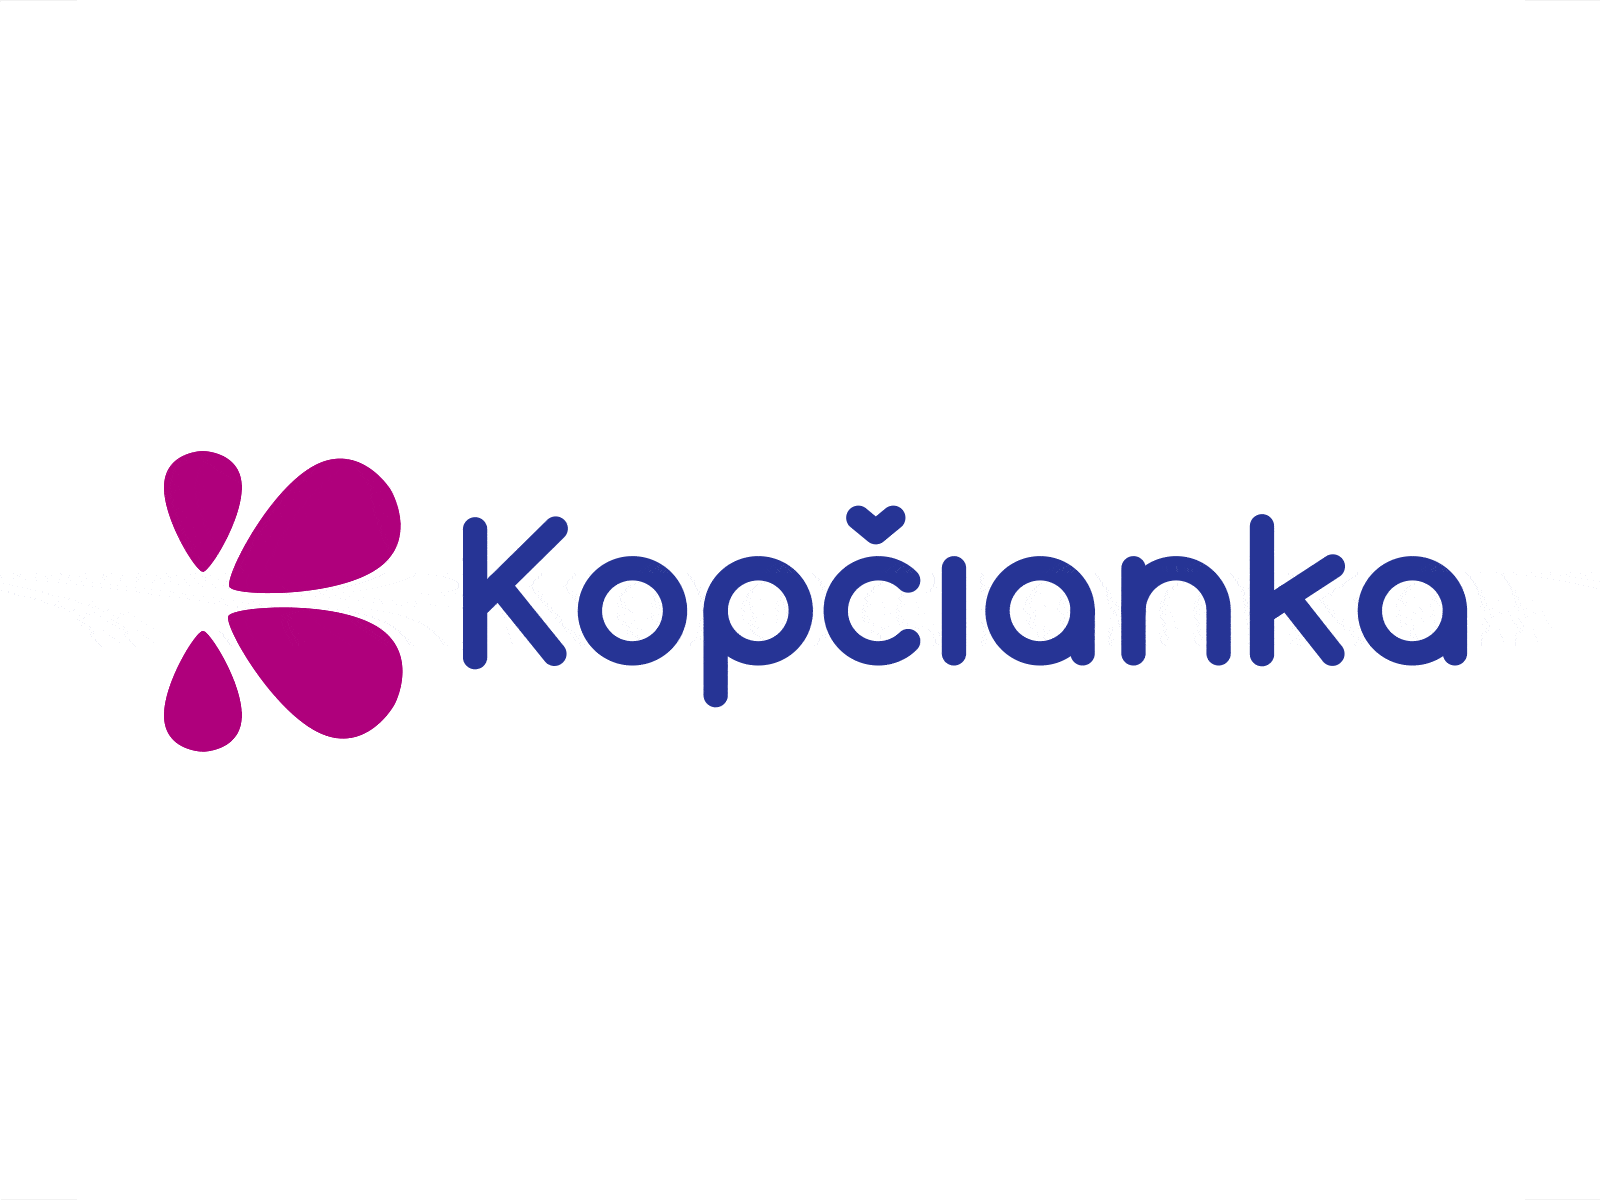 Kopcianka logo animation